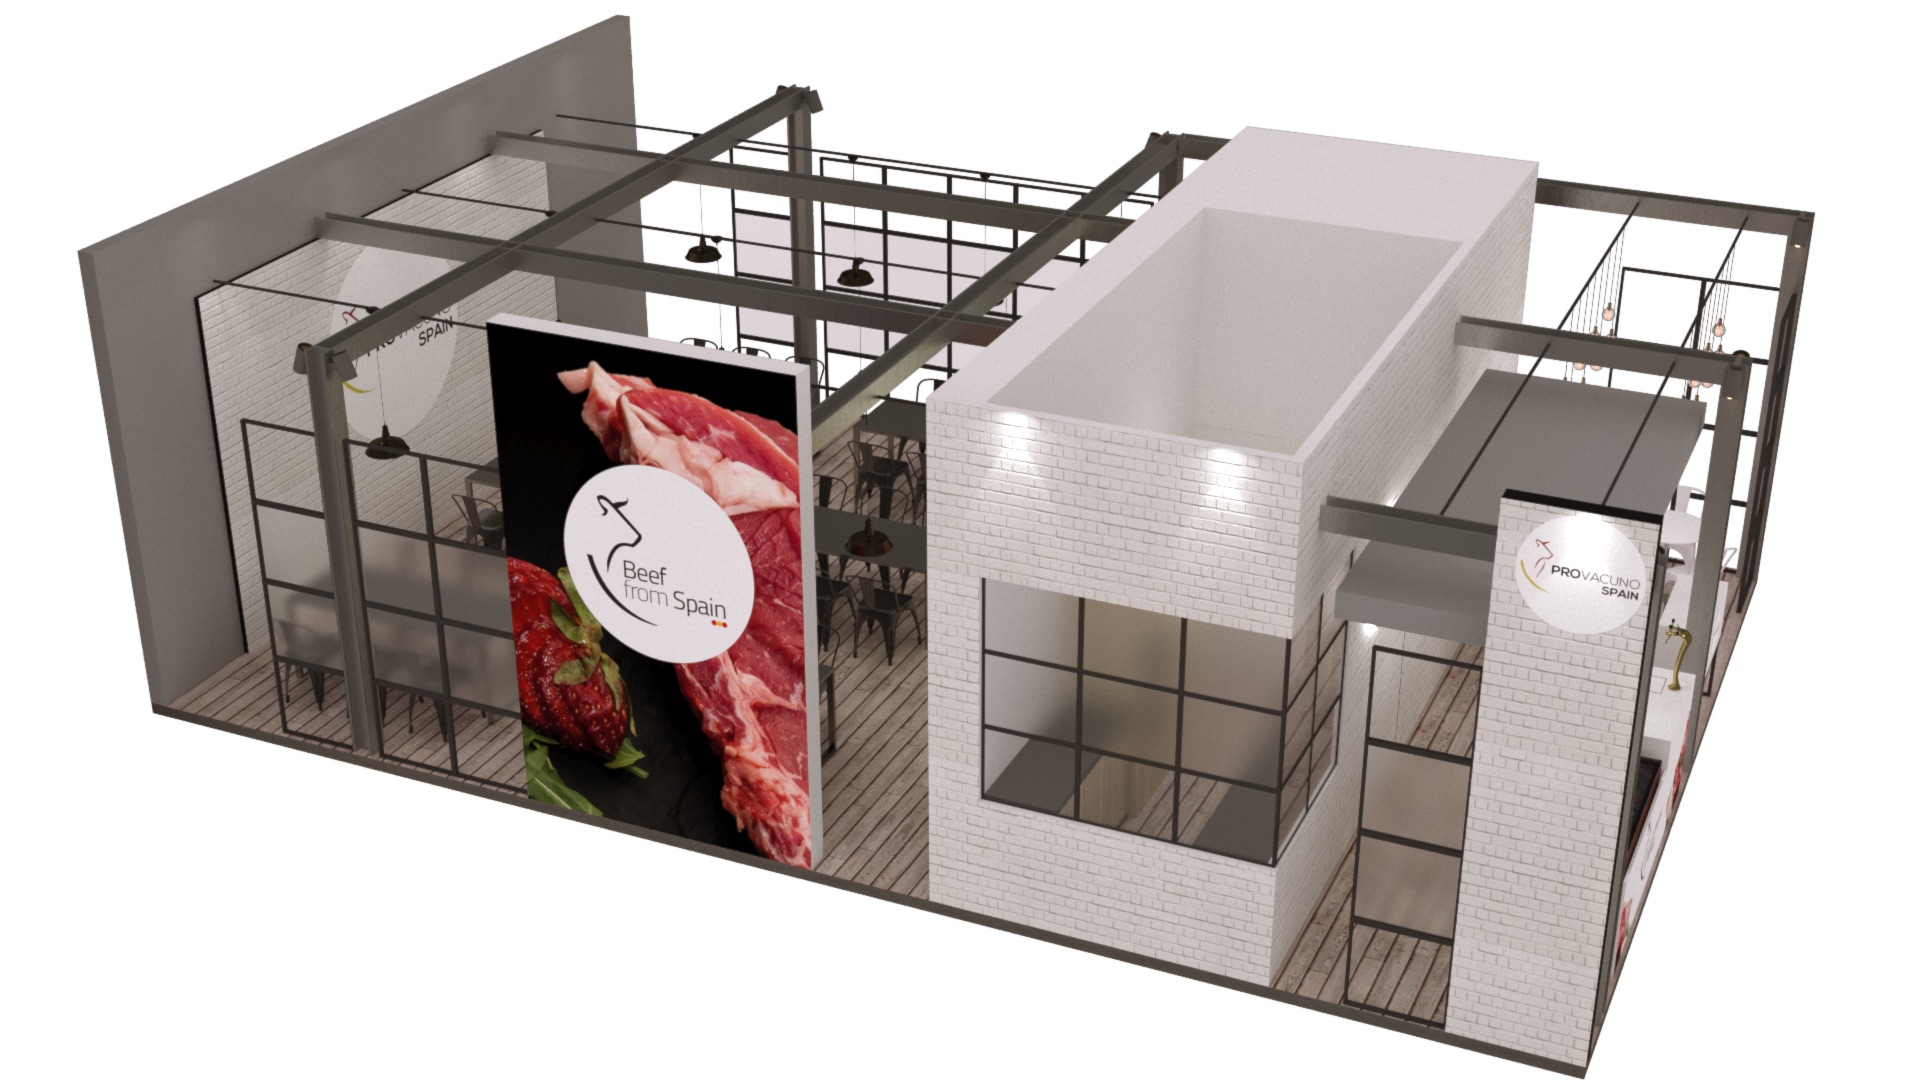 Stand 3D de Provacuno para la feria Meat 2019